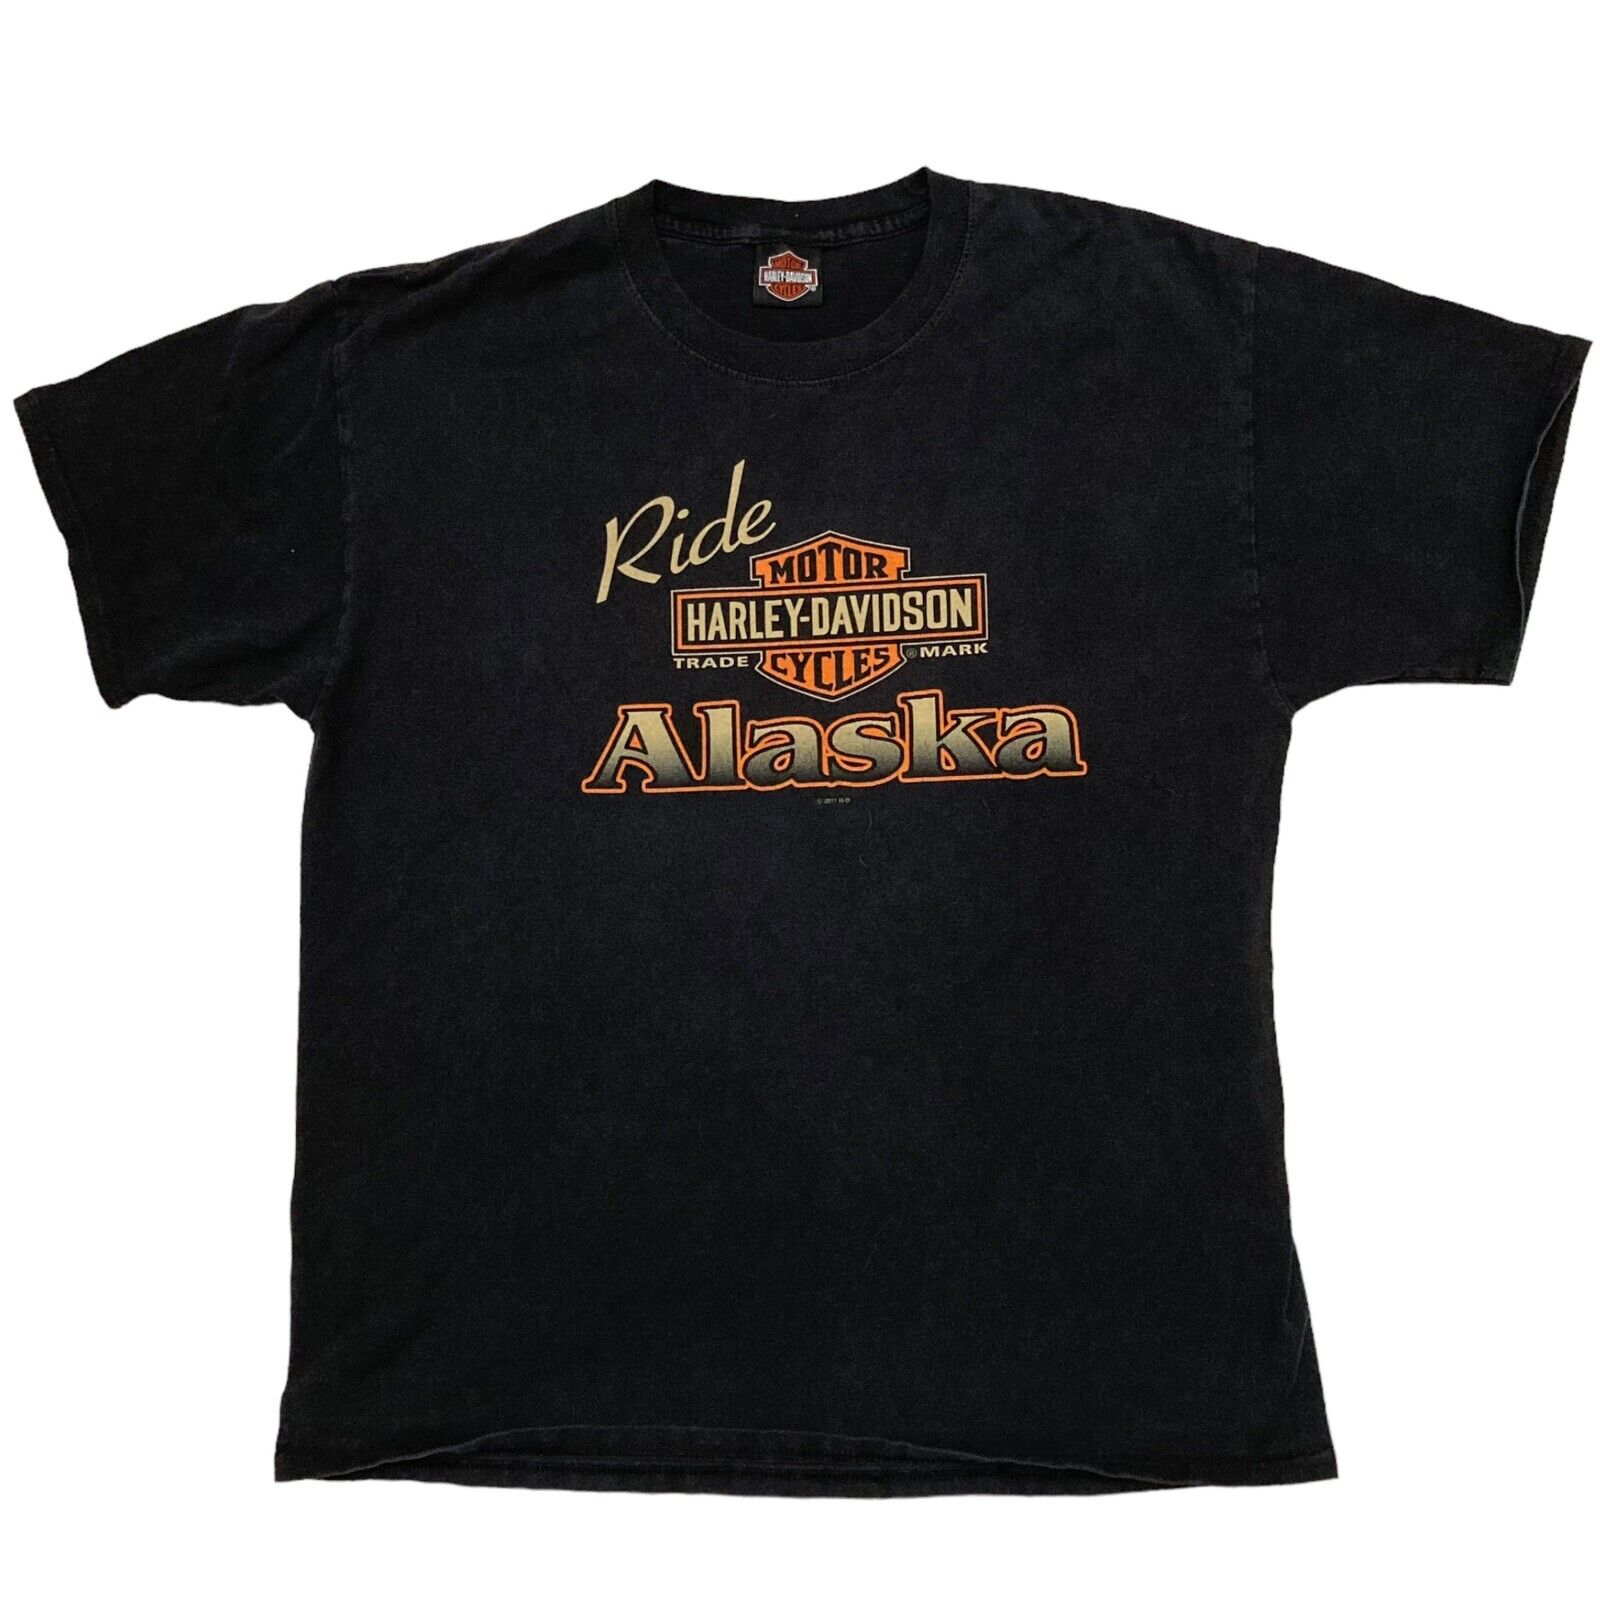 Harley Davidson Alaska Mt McKinley Denali Park T-shirt L 2011 RK Stratman